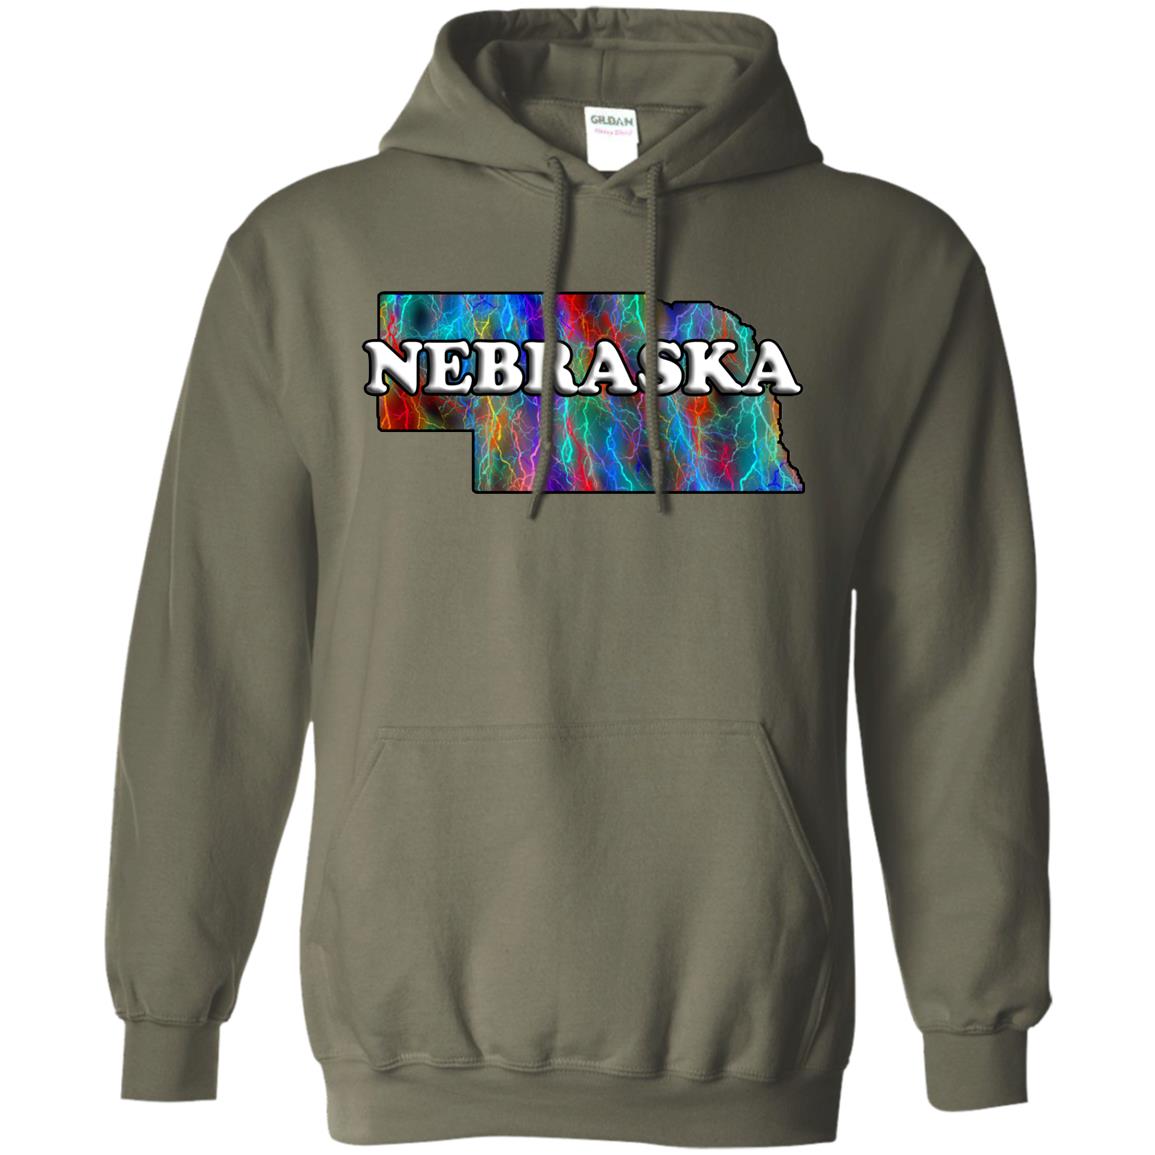 Nebraska State Hoodie